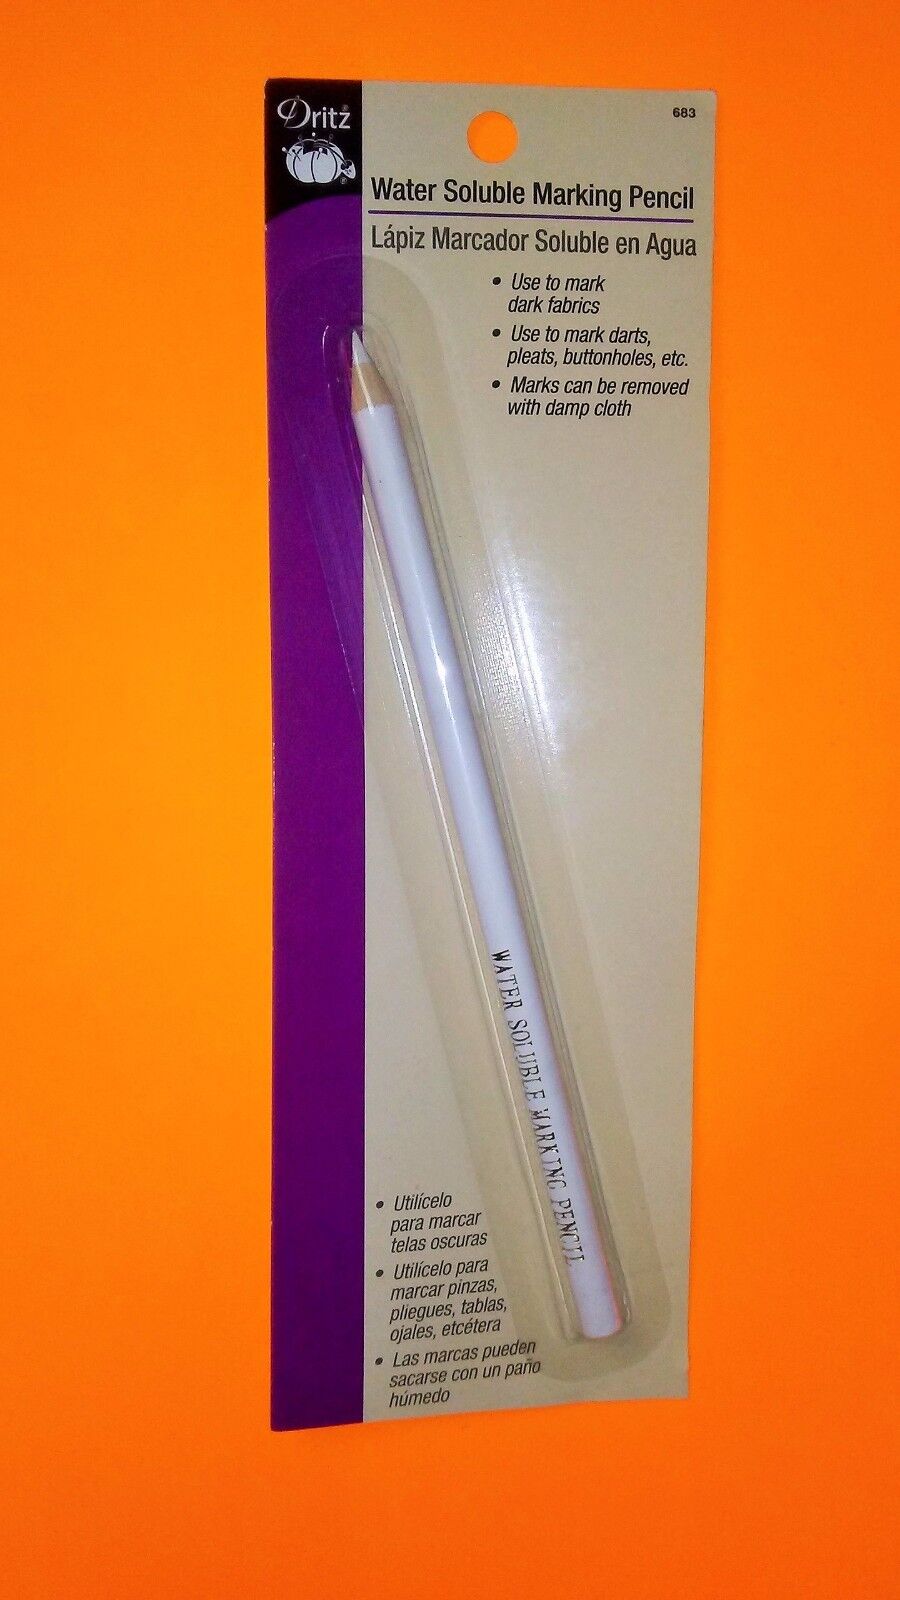 Dritz Water Soluble White Marking Pencil - Use to mark dark fabrics